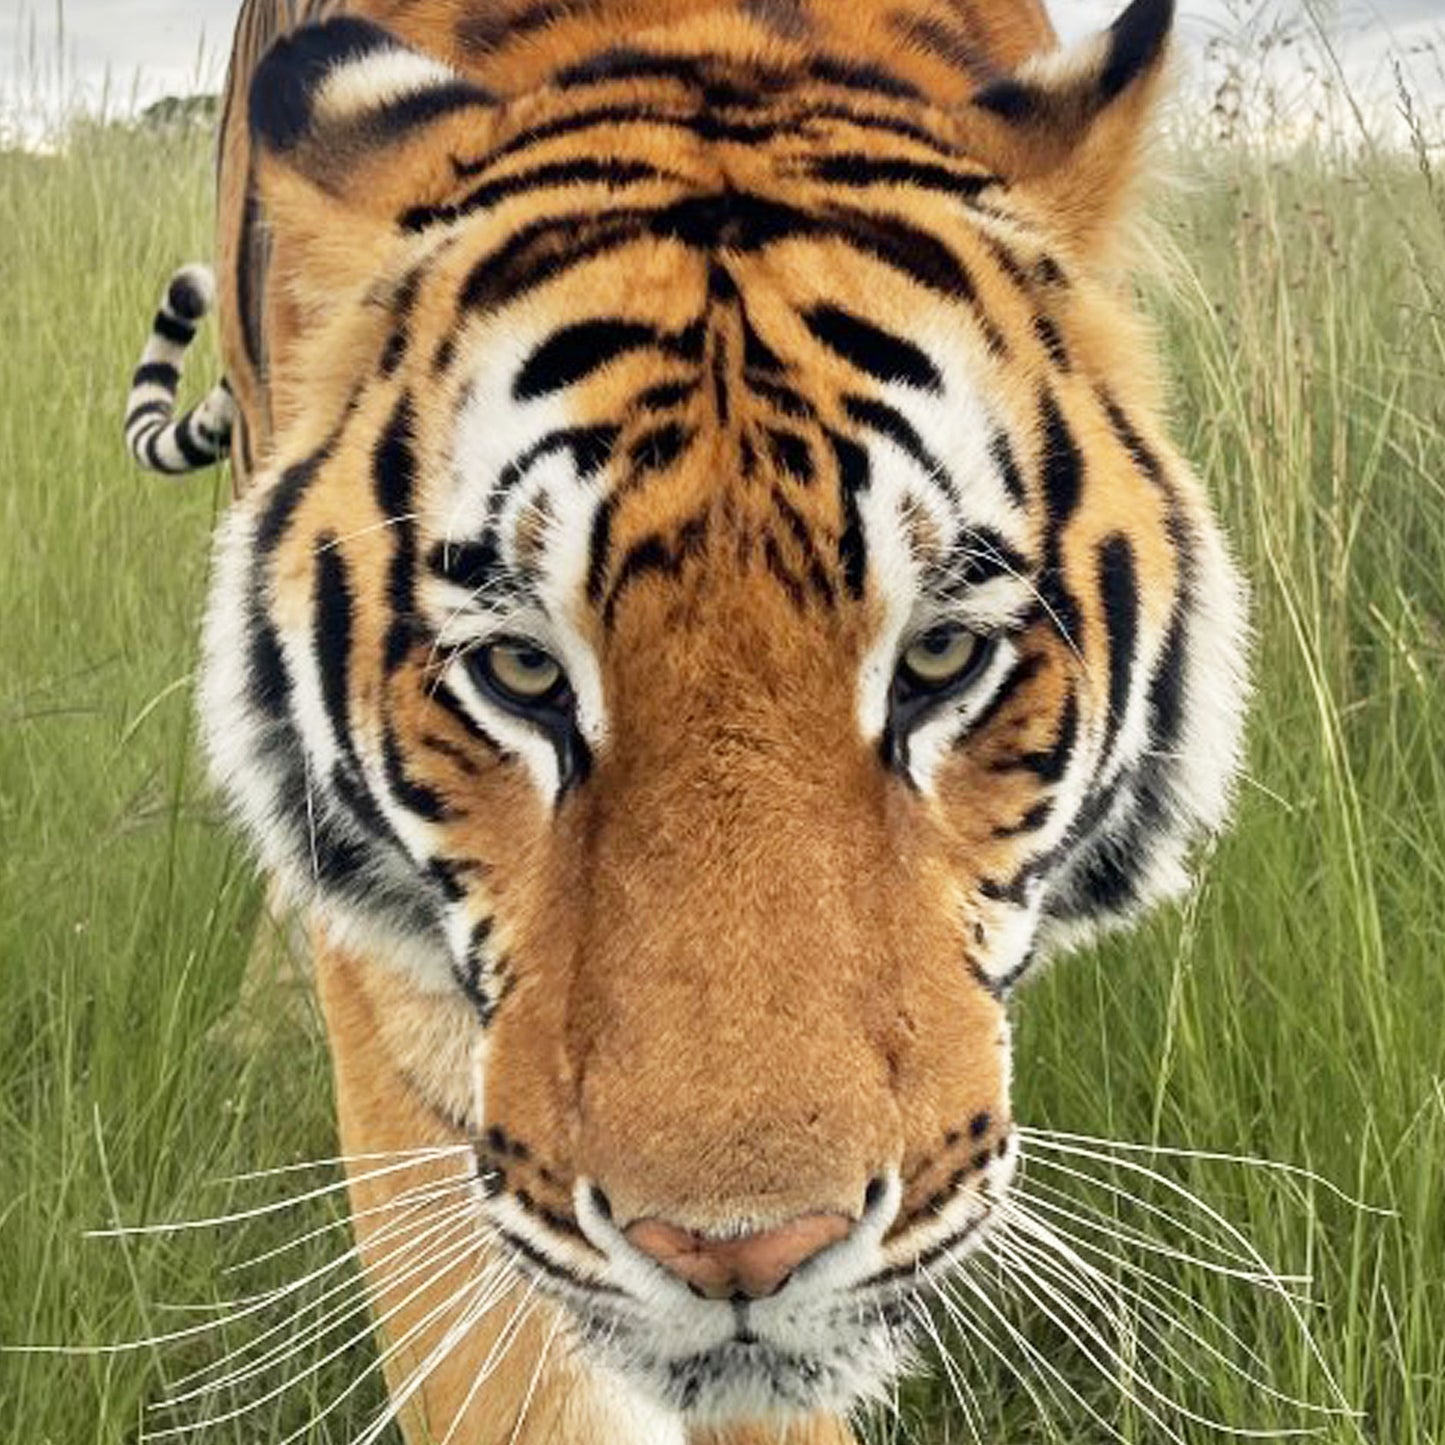 Tiger adoption - gold